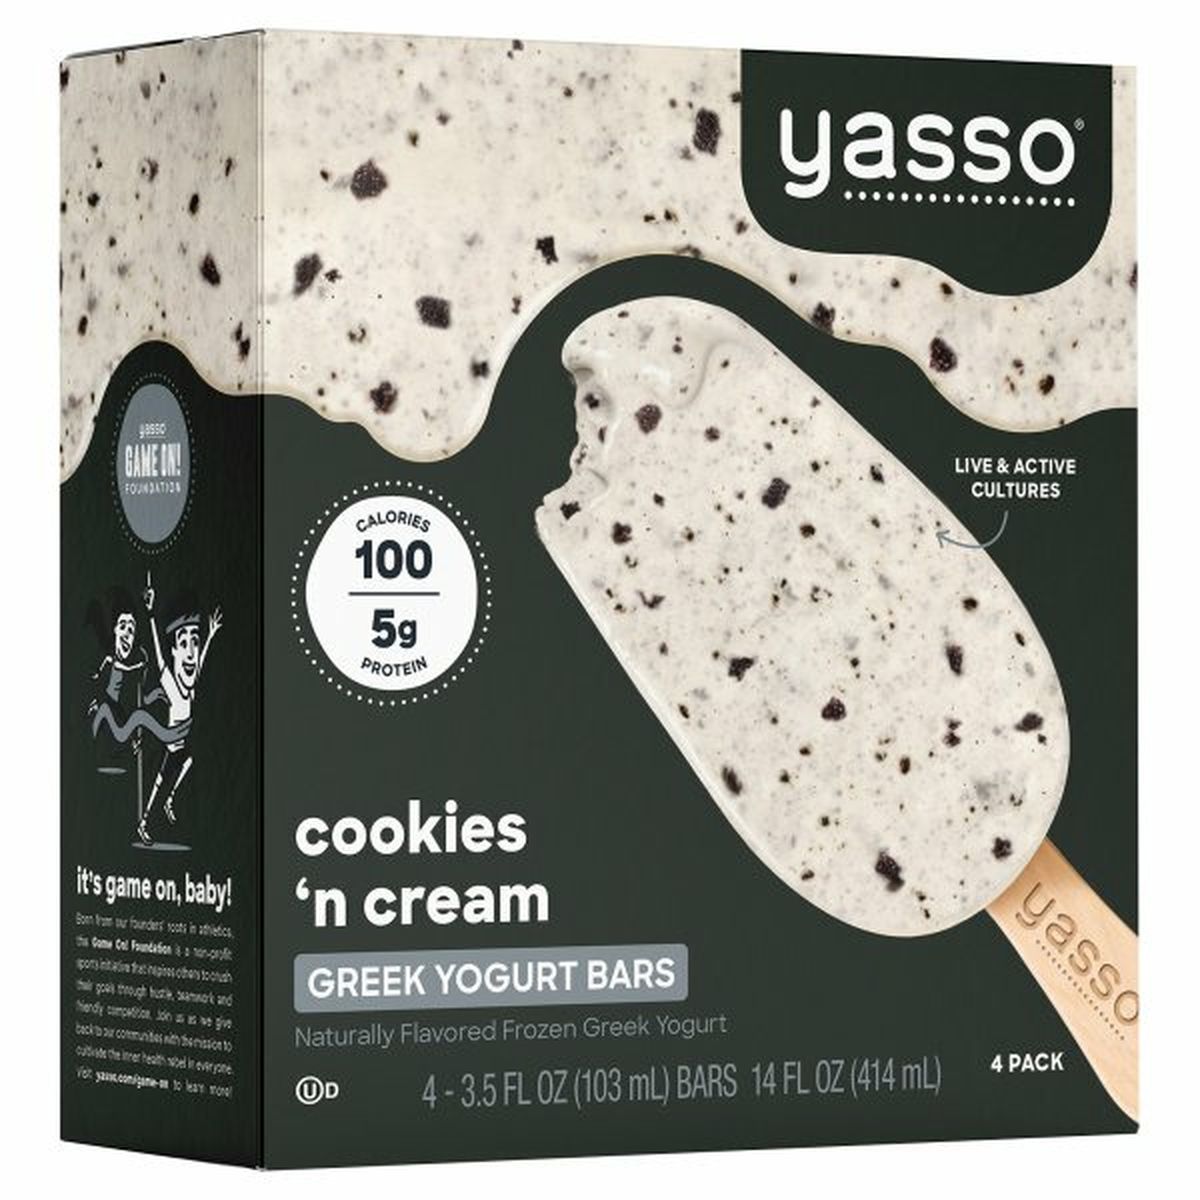 Calories in Yasso Frozen Greek Yogurt, Cookies n' Cream Bars, 4 pack